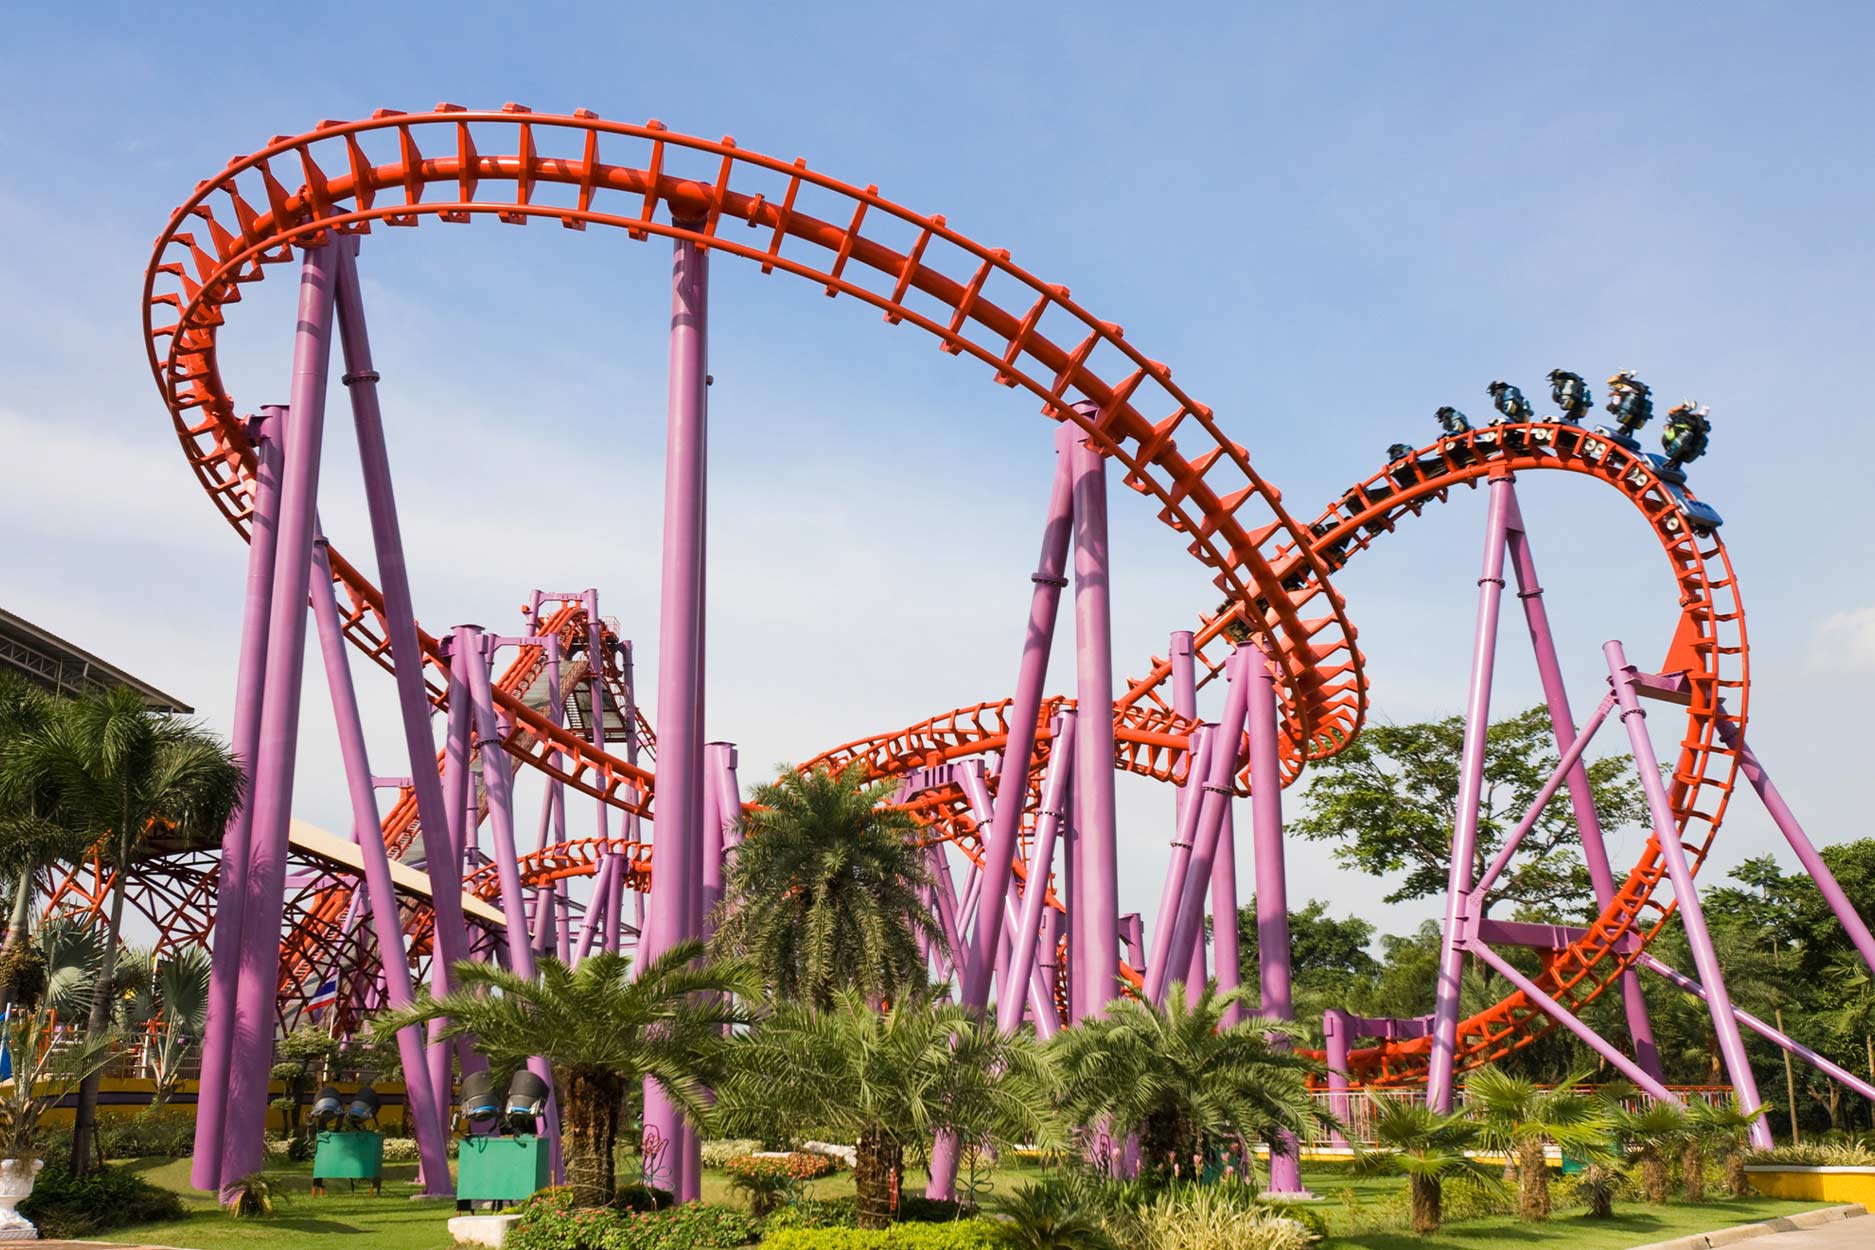 Roller coaster at a theme park